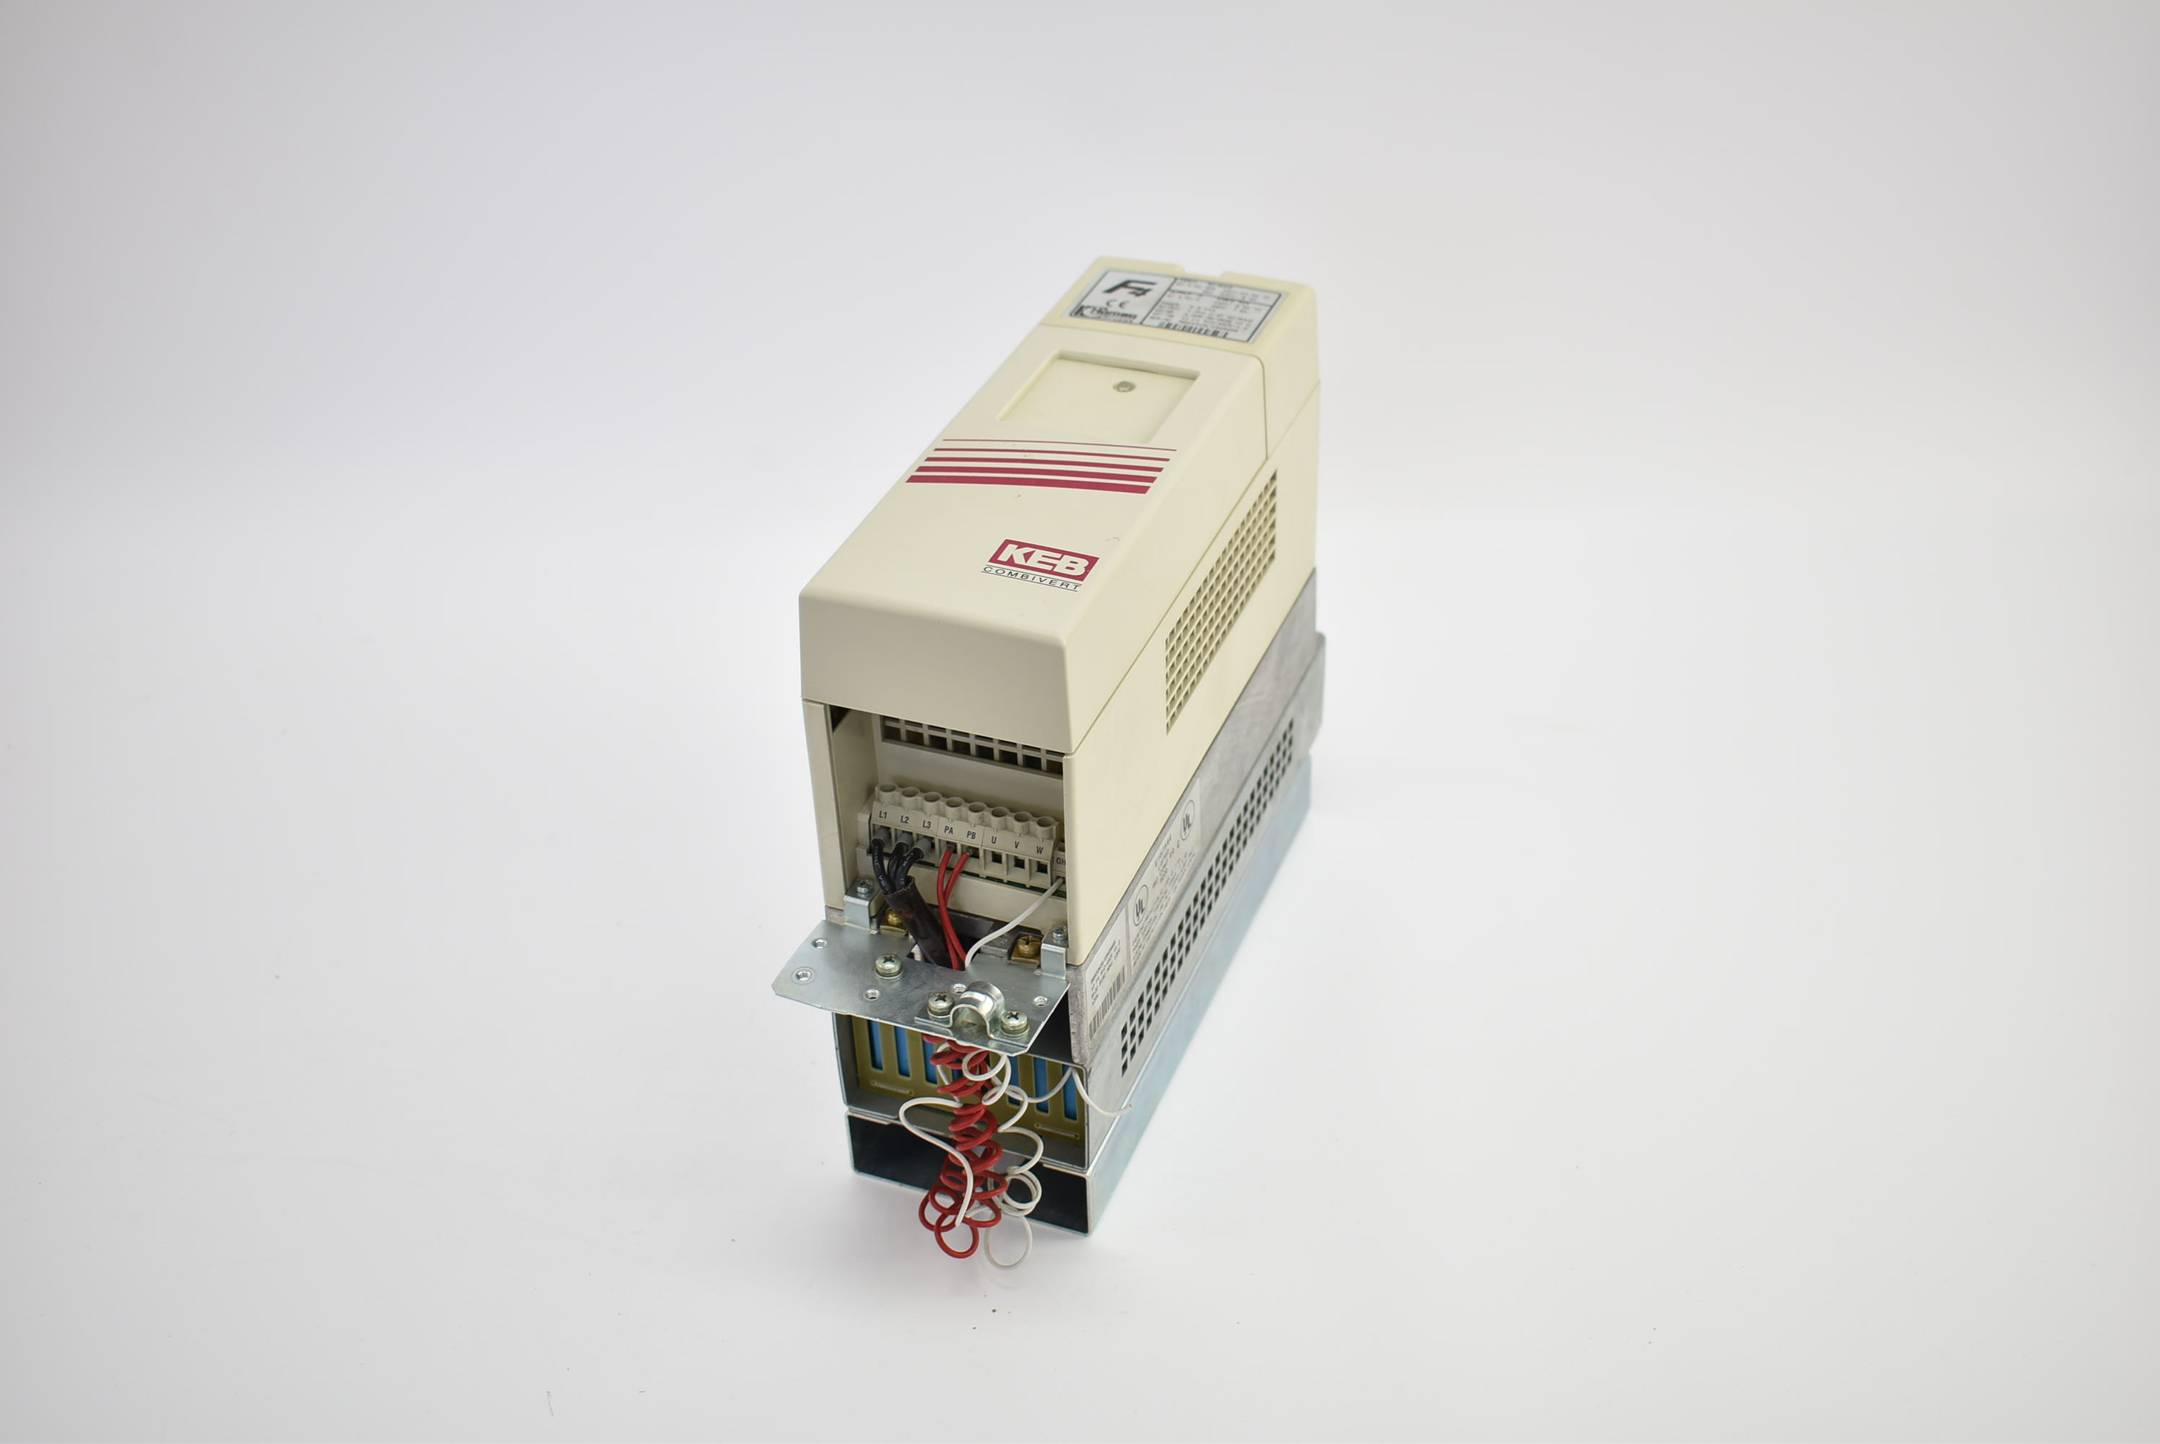 KEB Combivert Frequenzumrichter 12.F4.S1D-4A01 V1.2 ( E167544 )